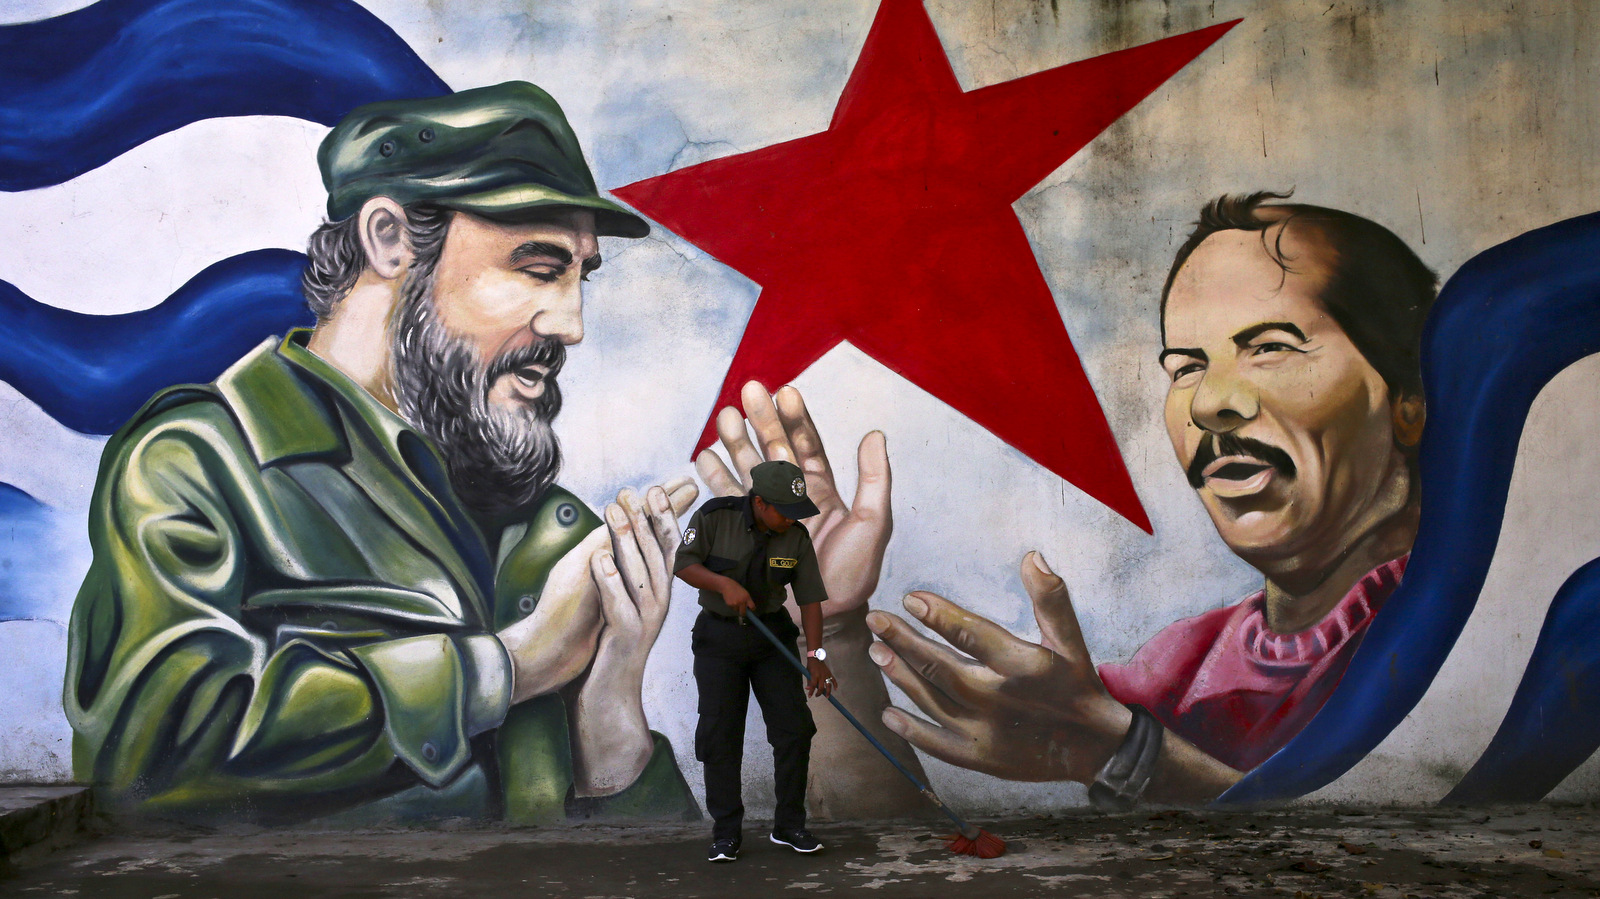 A woman sweeps the Cuba Plaza backdropped by a mural depicting Cuba's former President Fidel Castro and Nicaragua's President Daniel Ortega, in Managua, Nicaragua, Friday, Nov. 4, 2016. (AP Photo/Esteban Felix)